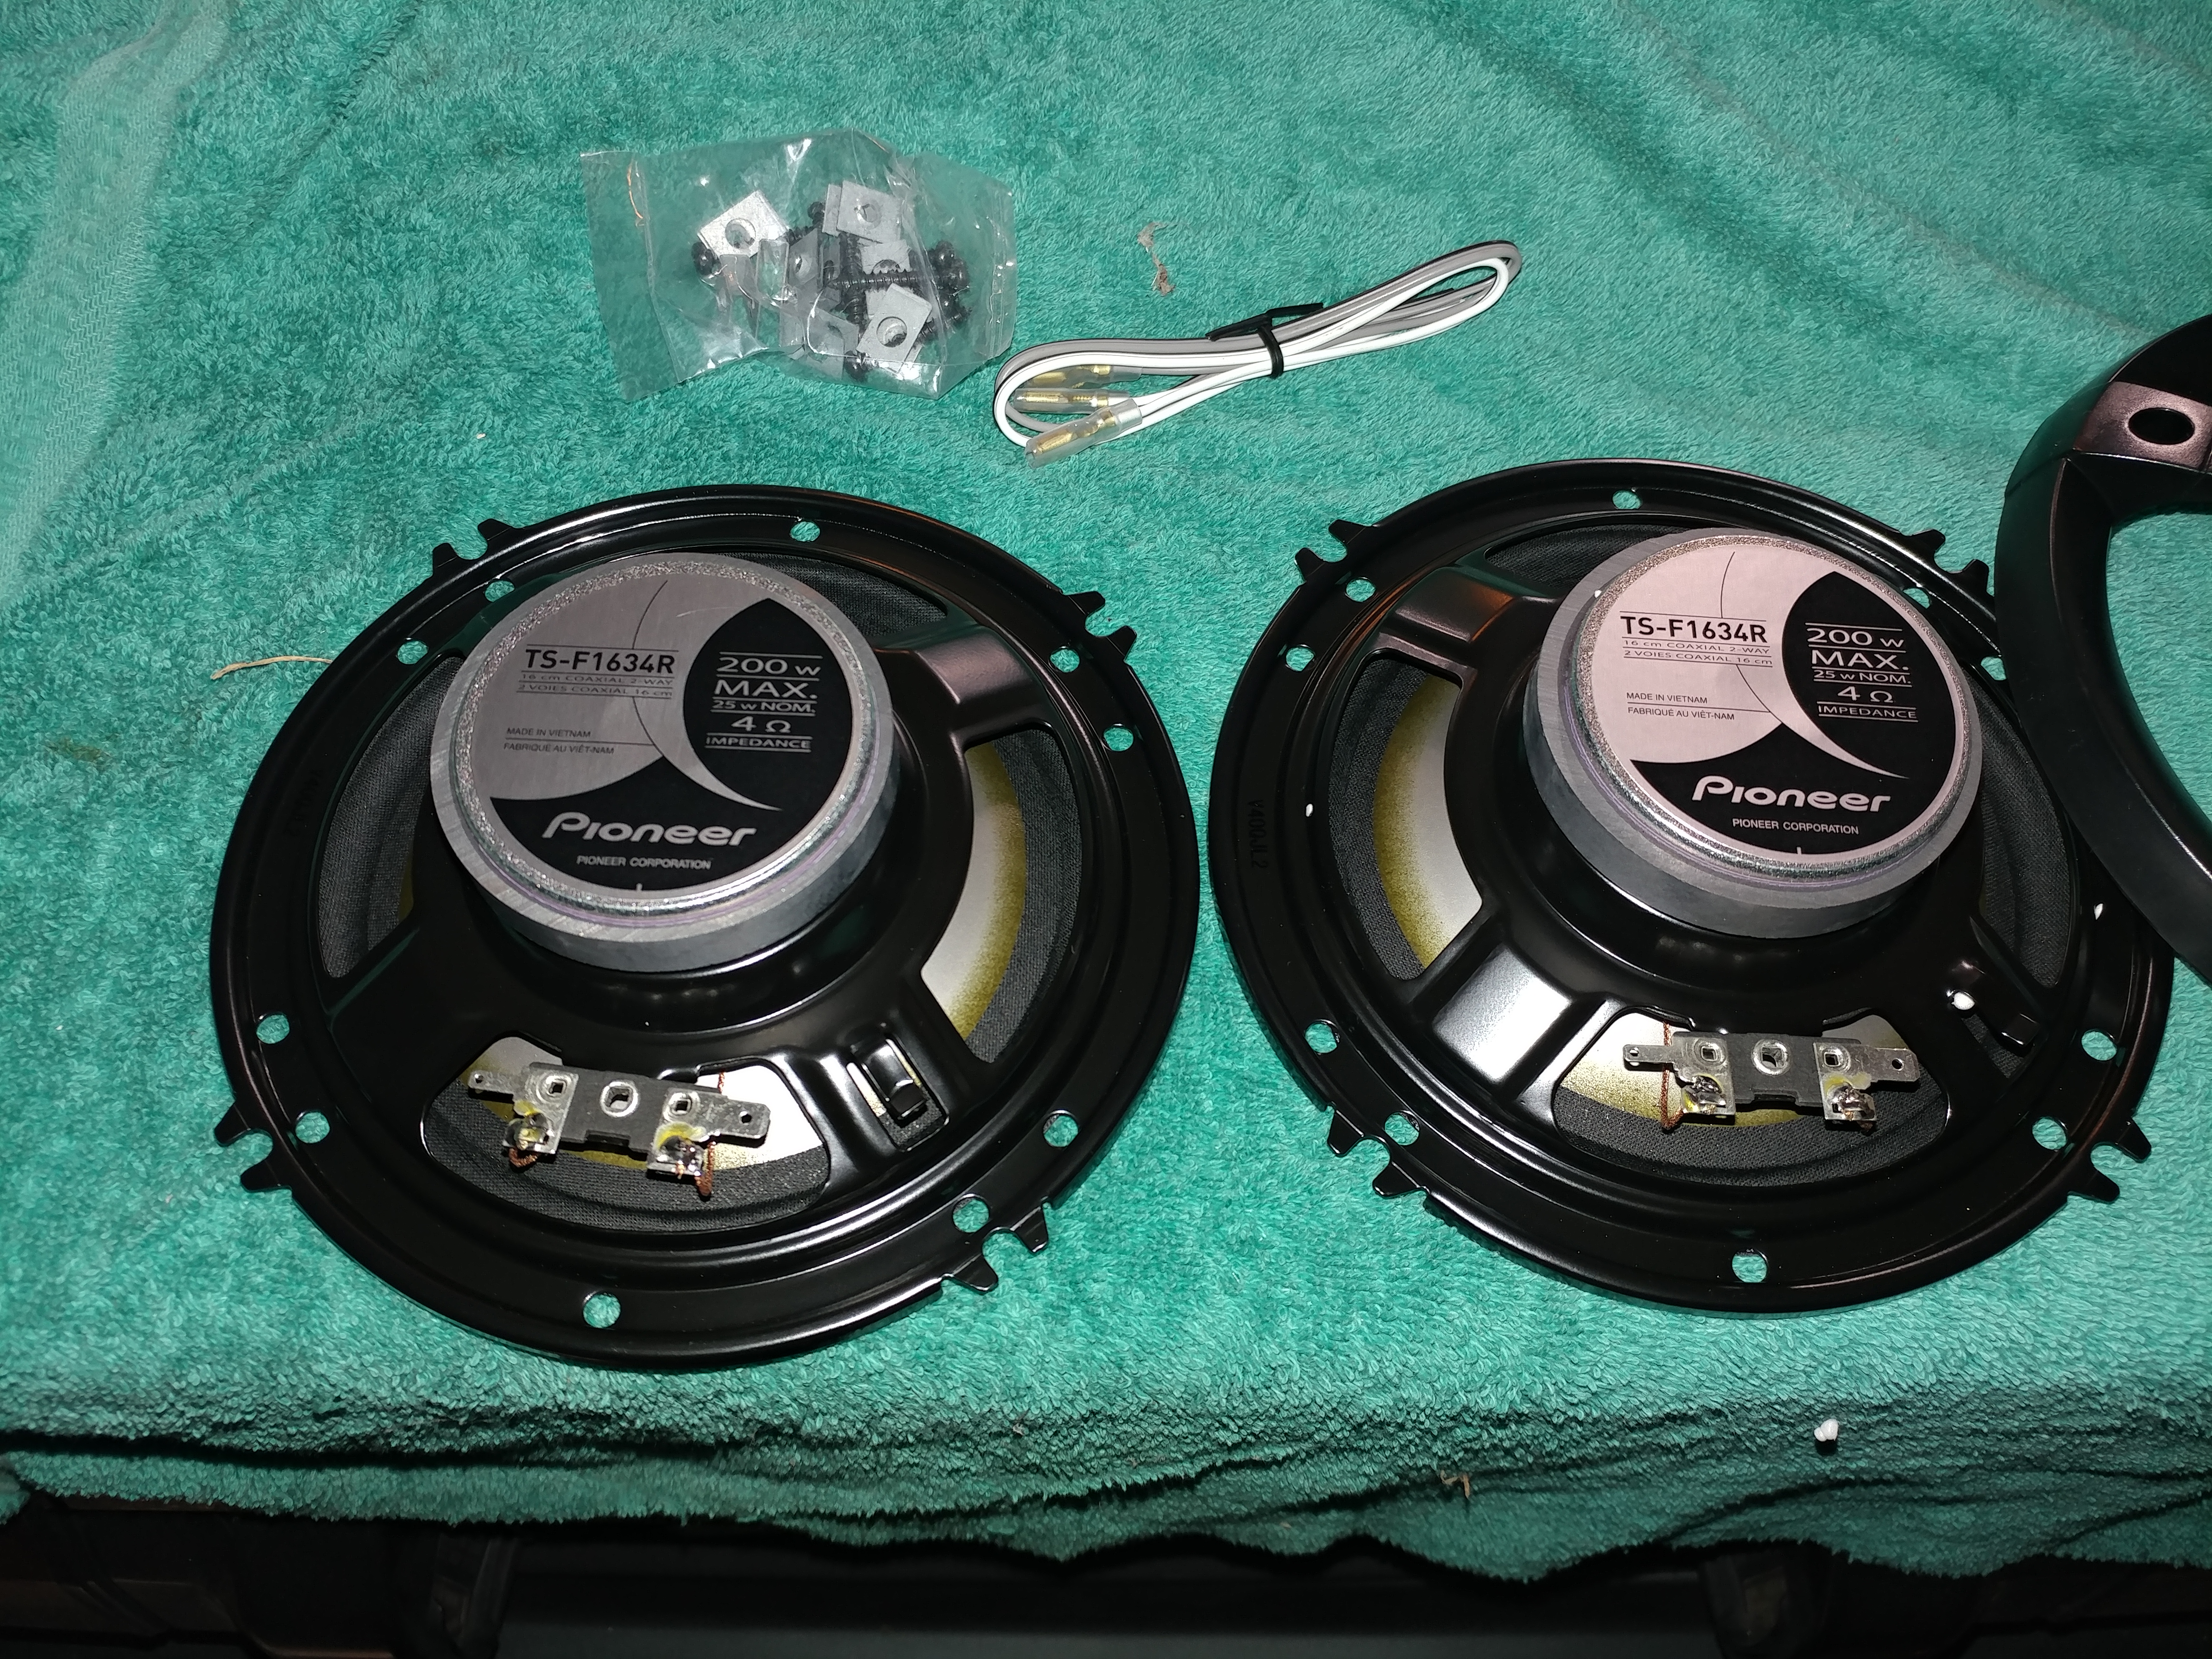 new car speakers